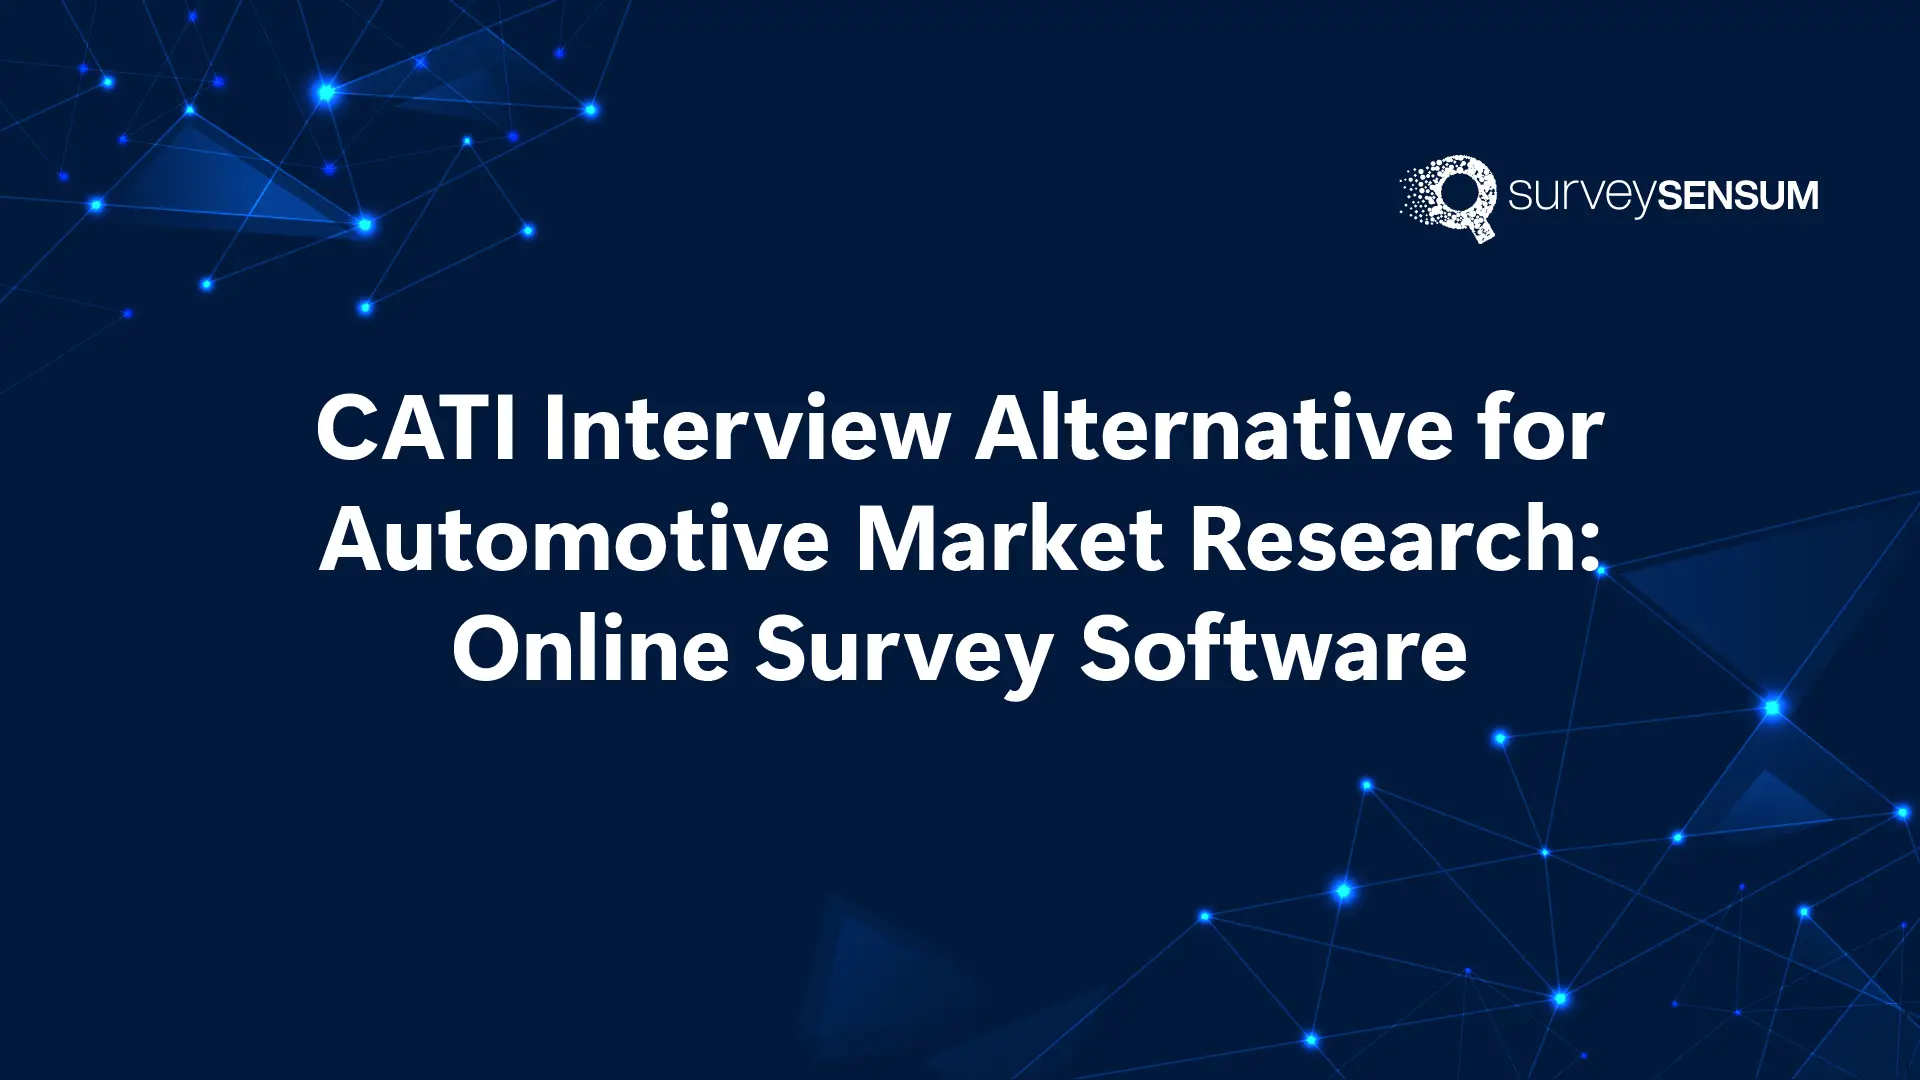 CATI Interview Alternative for Automotive Market Research Online survey software-5b71c947